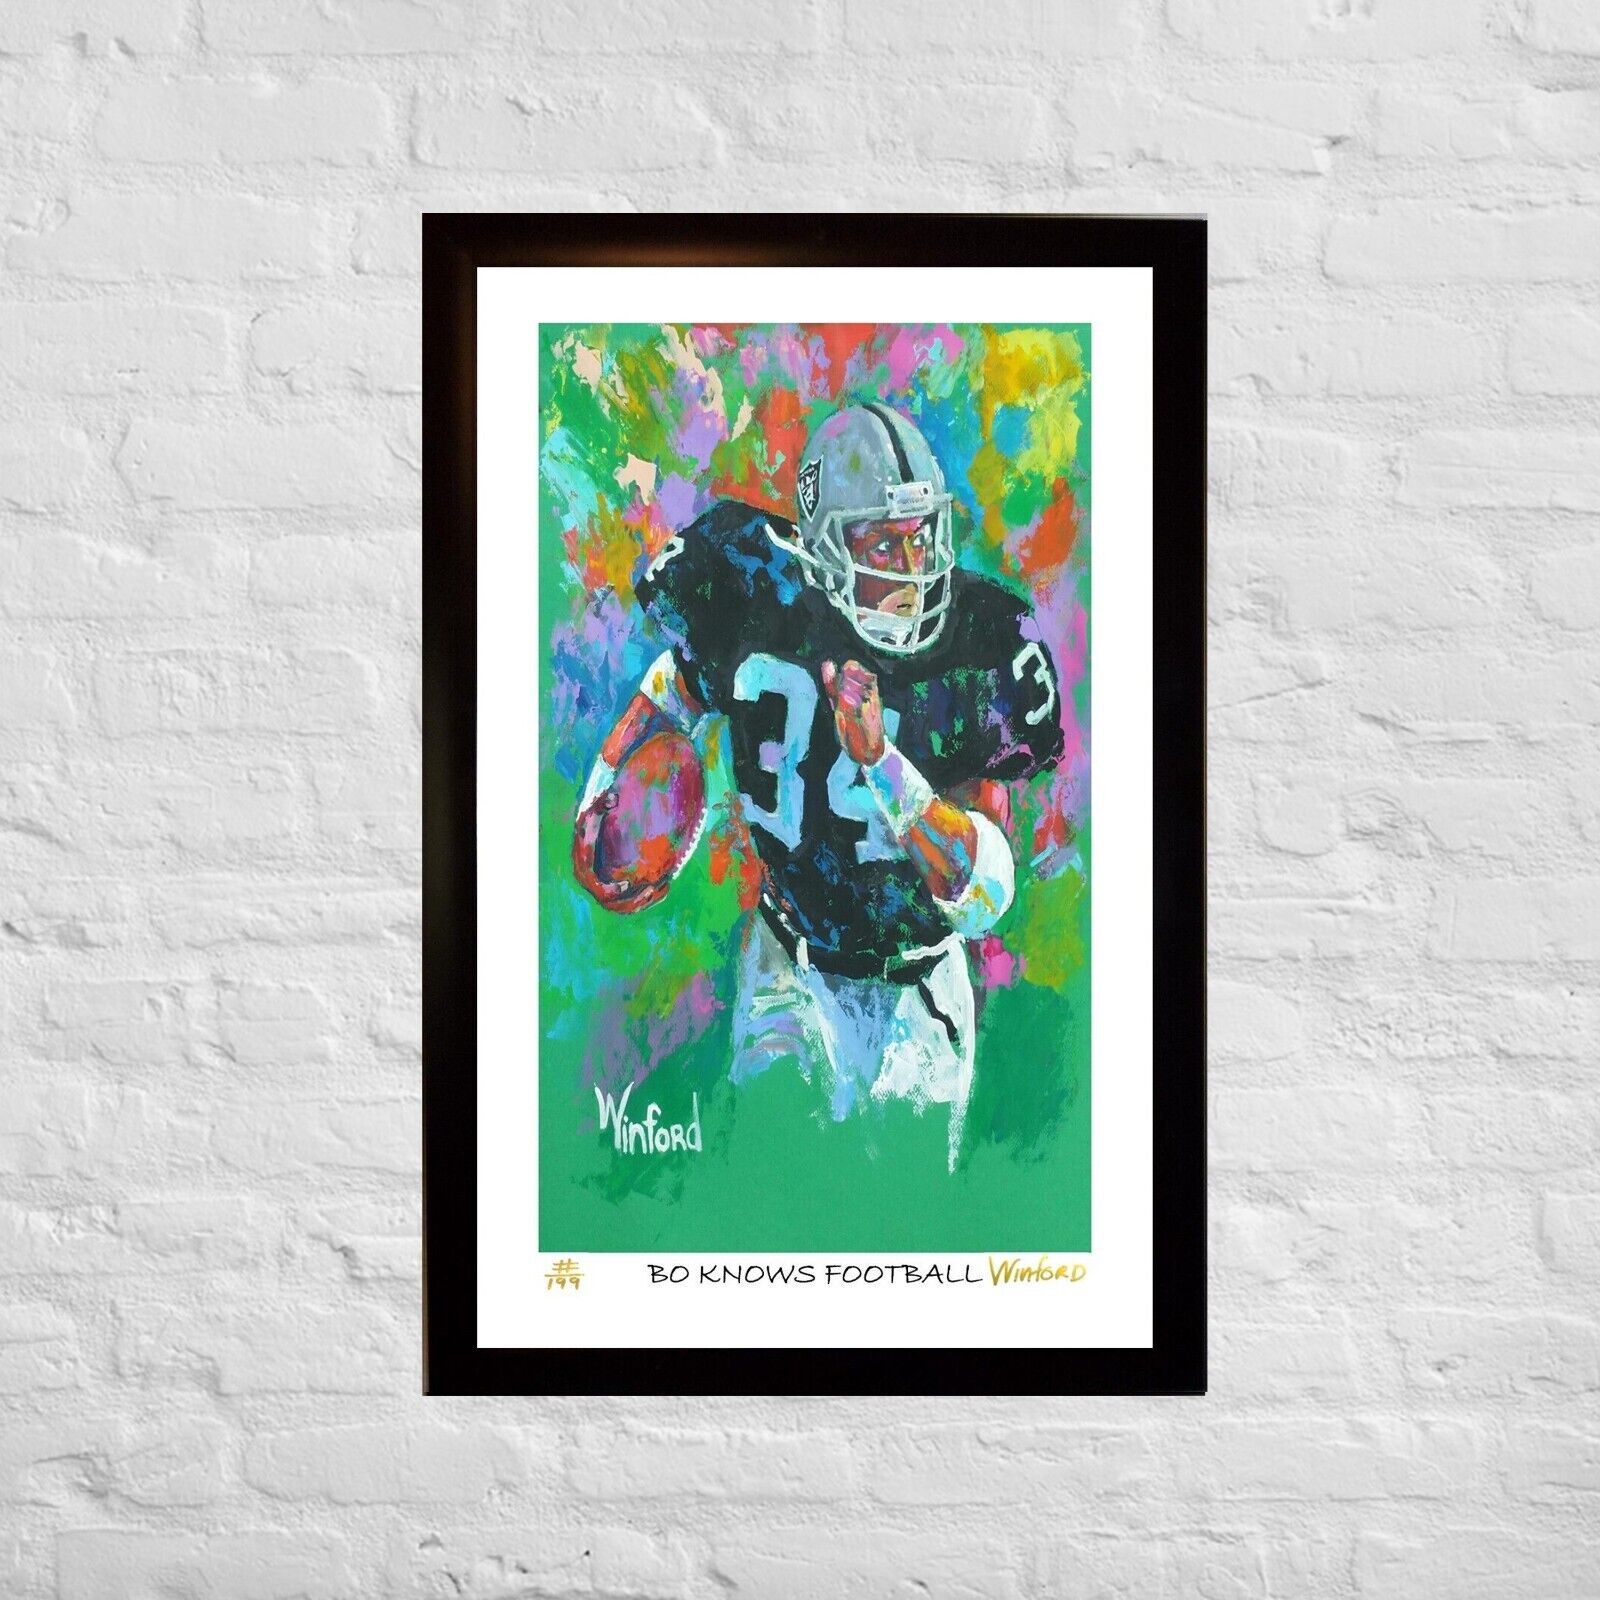 Sale Bo Jackson Bo Knows Football L.E. Premium Art Print Was $149.95 Now $29.95